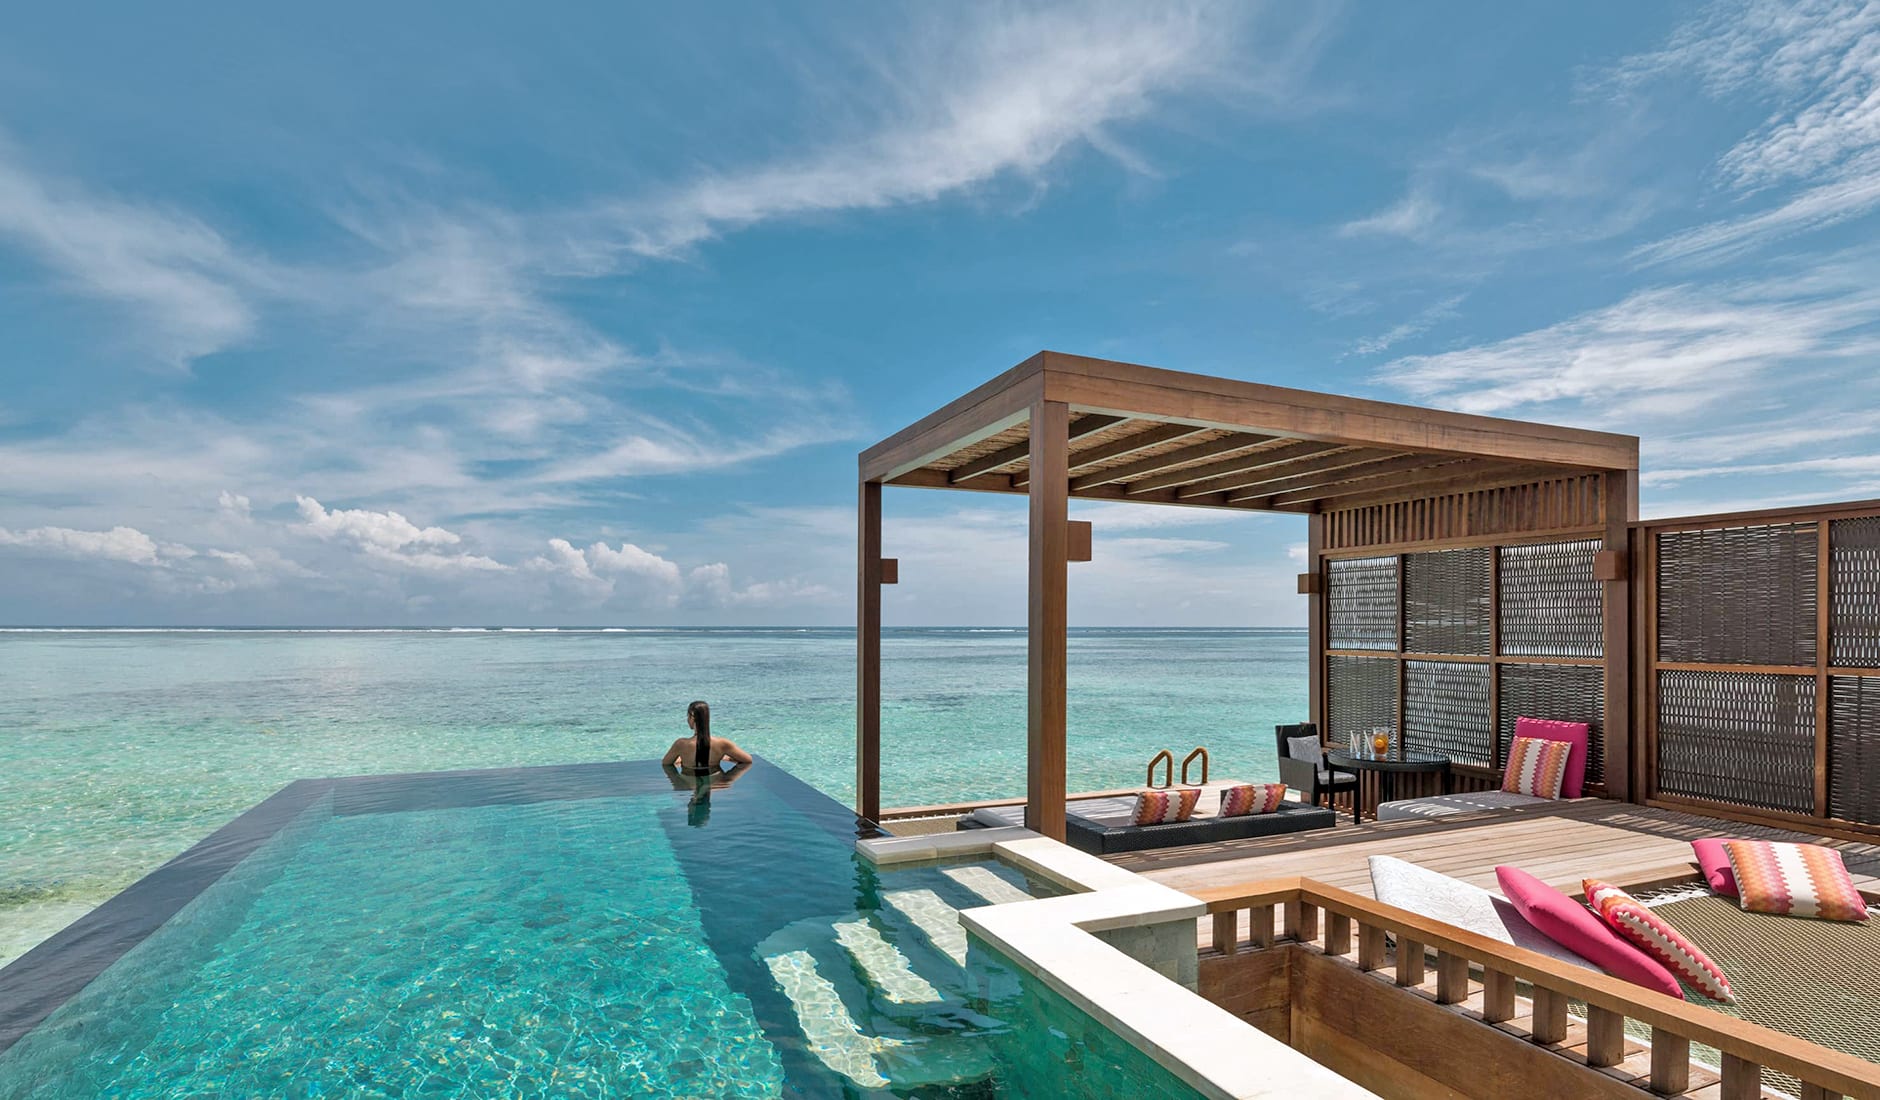 Four Seasons Resort Maldives at Kuda Huraa, Maldives. The Best Luxury Resorts in the Maldives by TravelPlusStyle.com